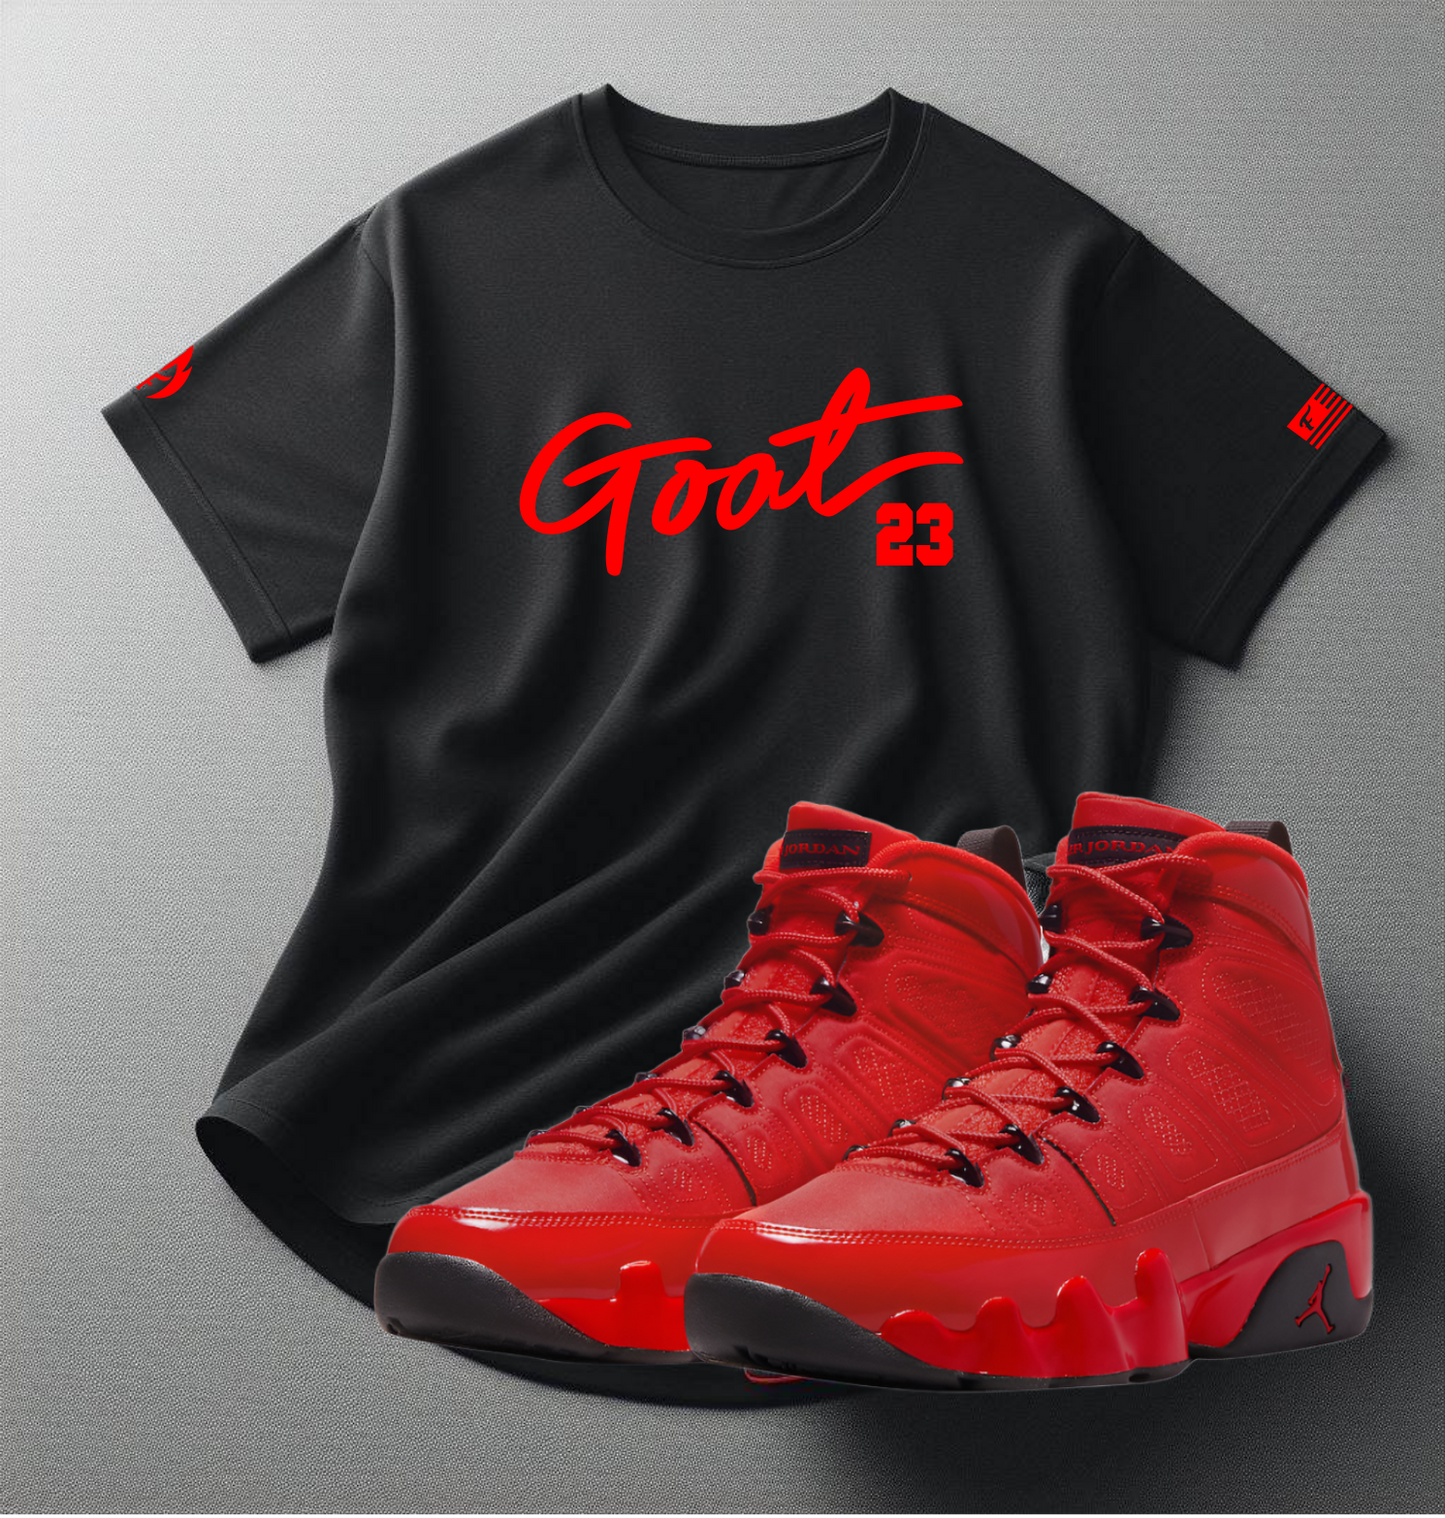 GOAT 23 Black T-Shirt To Match Air Jordan Retro 9 Chili Red Men's Sneaker Tees